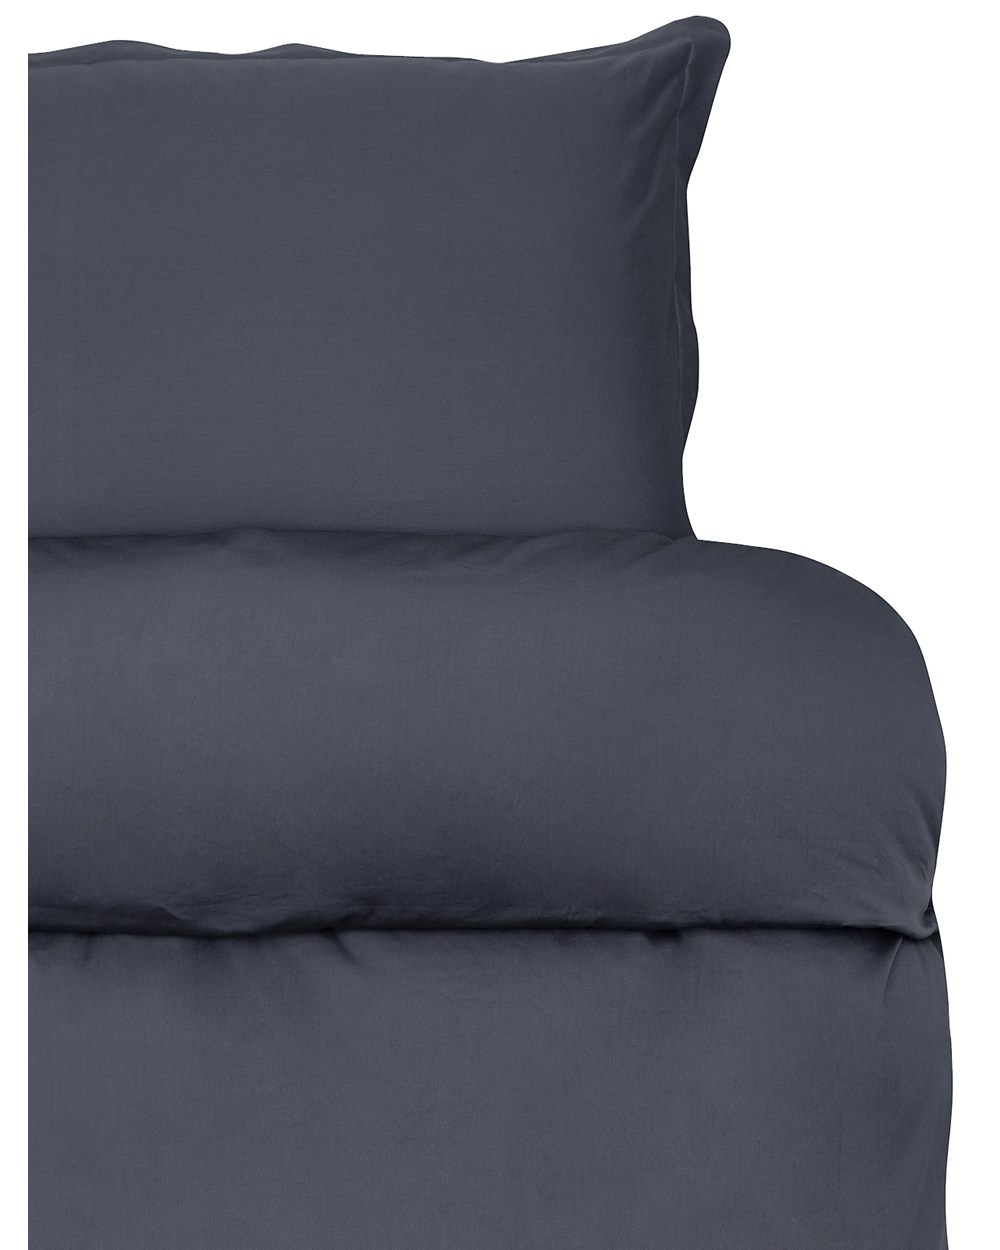 Elegance Påslakanset Mörkblå 150x210/50x60cm